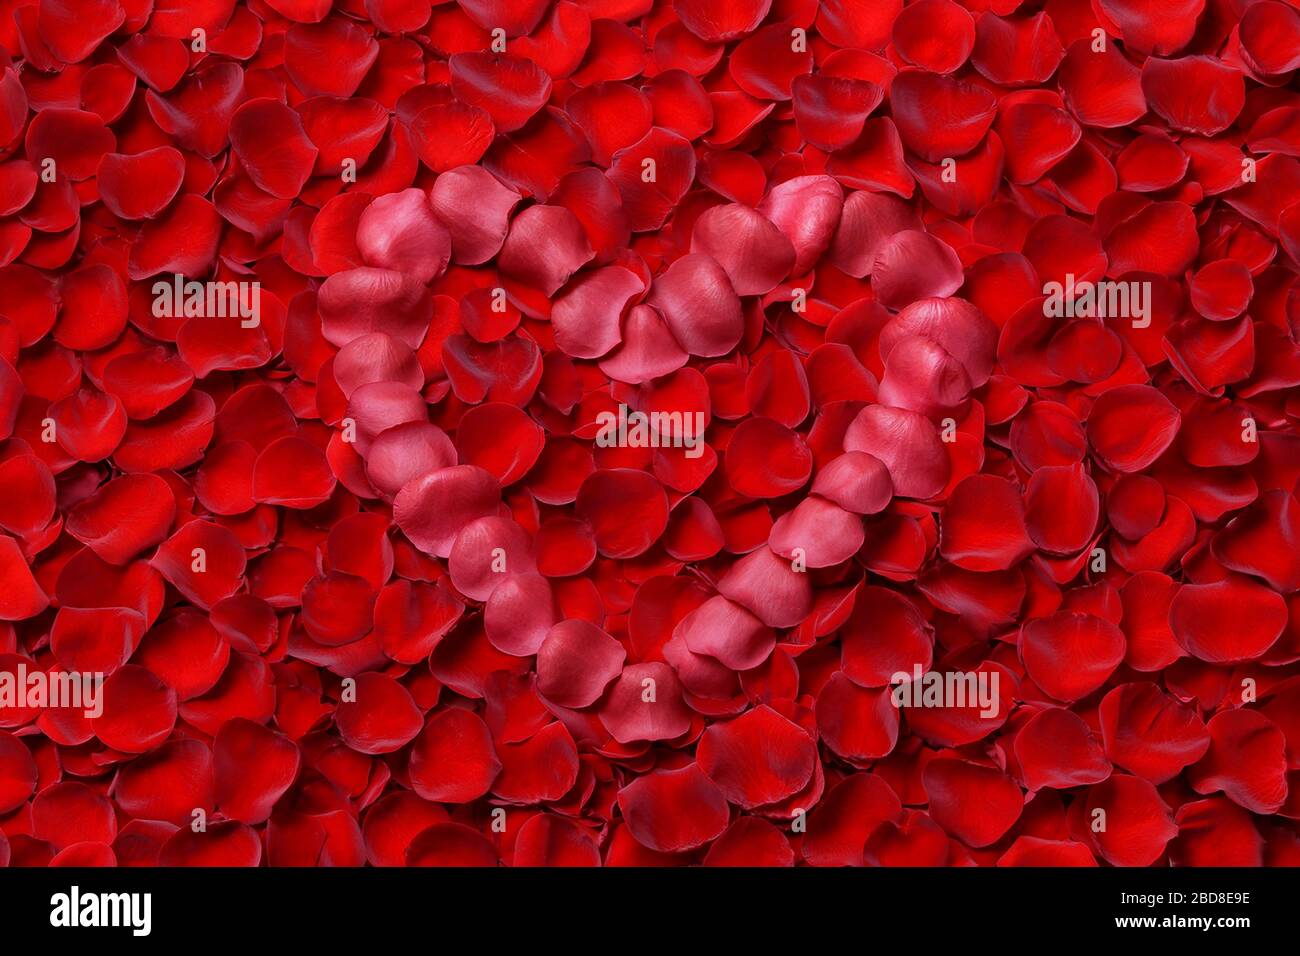 Foto Illustration der Herzform aus roten Rosenblättern. Stockfoto